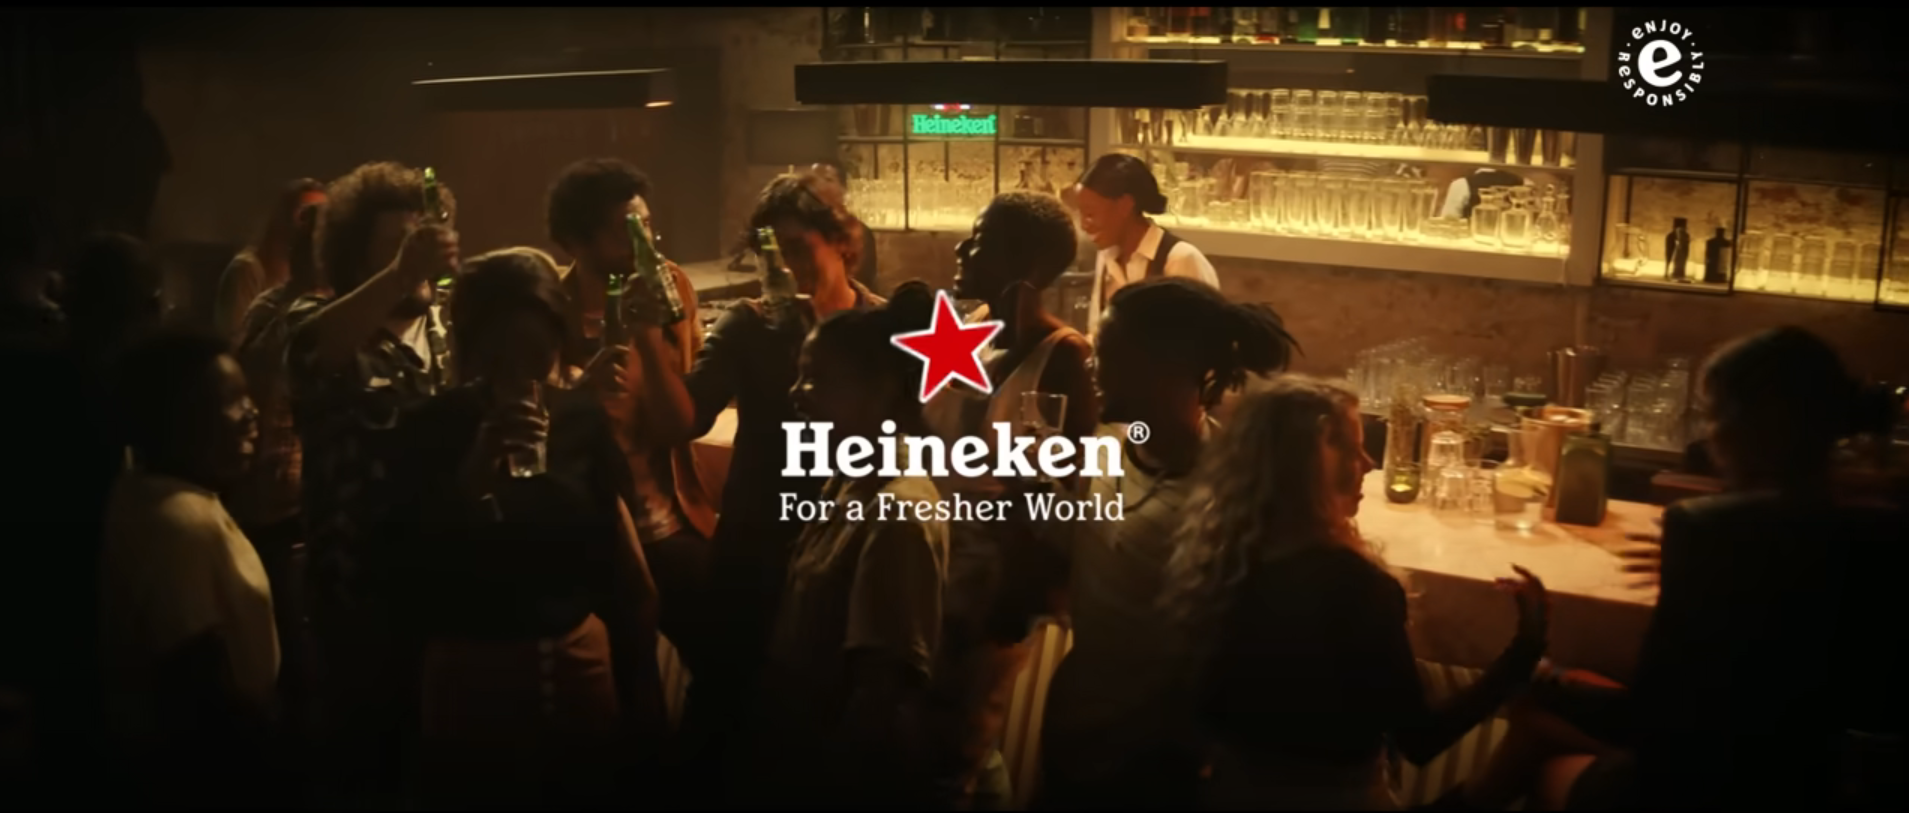 Heineken 150 Years